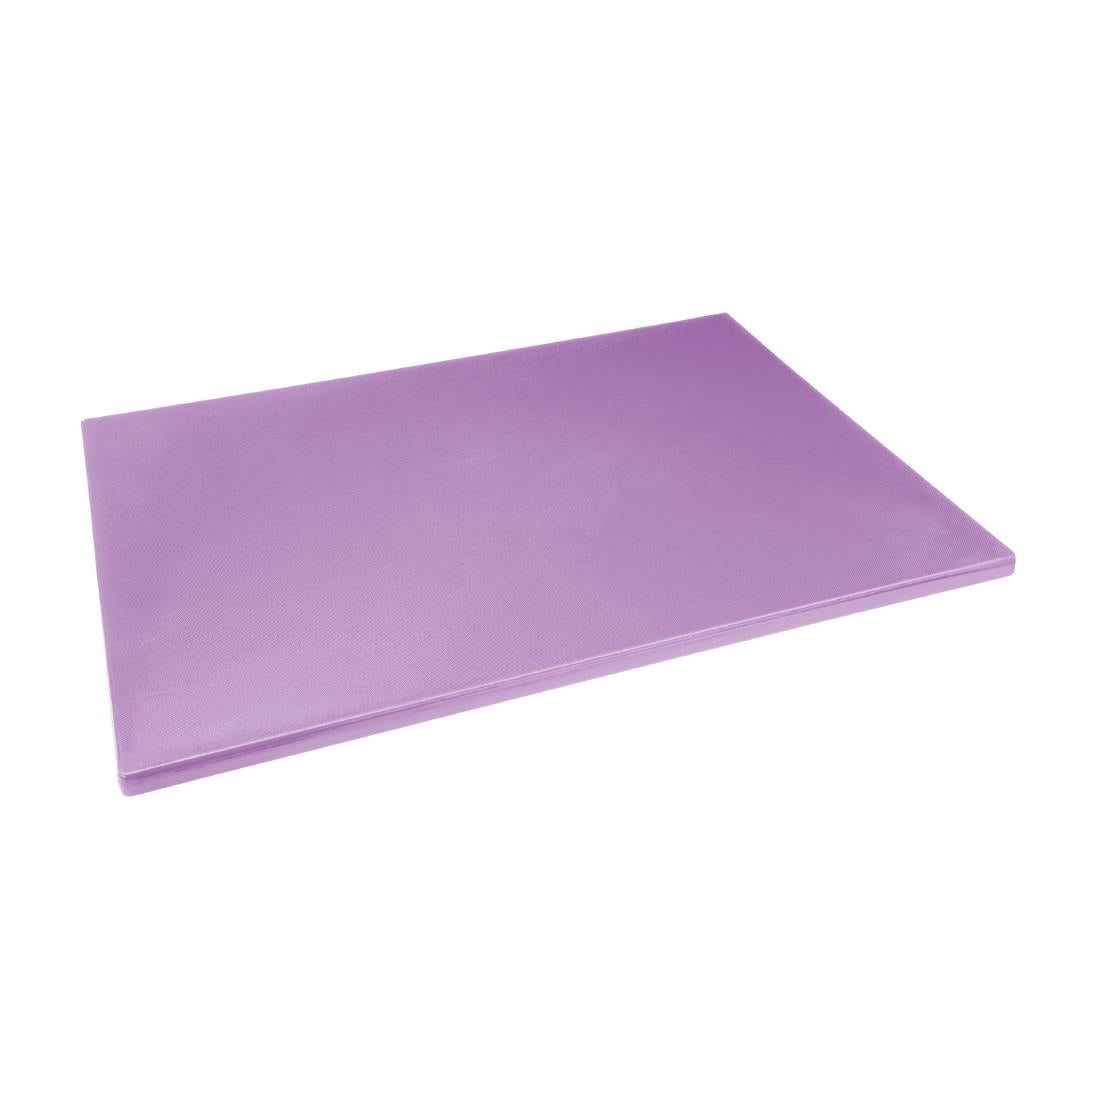 FX109 Hygiplas Low Density Chopping Board Purple - 600x450x20mm JD Catering Equipment Solutions Ltd